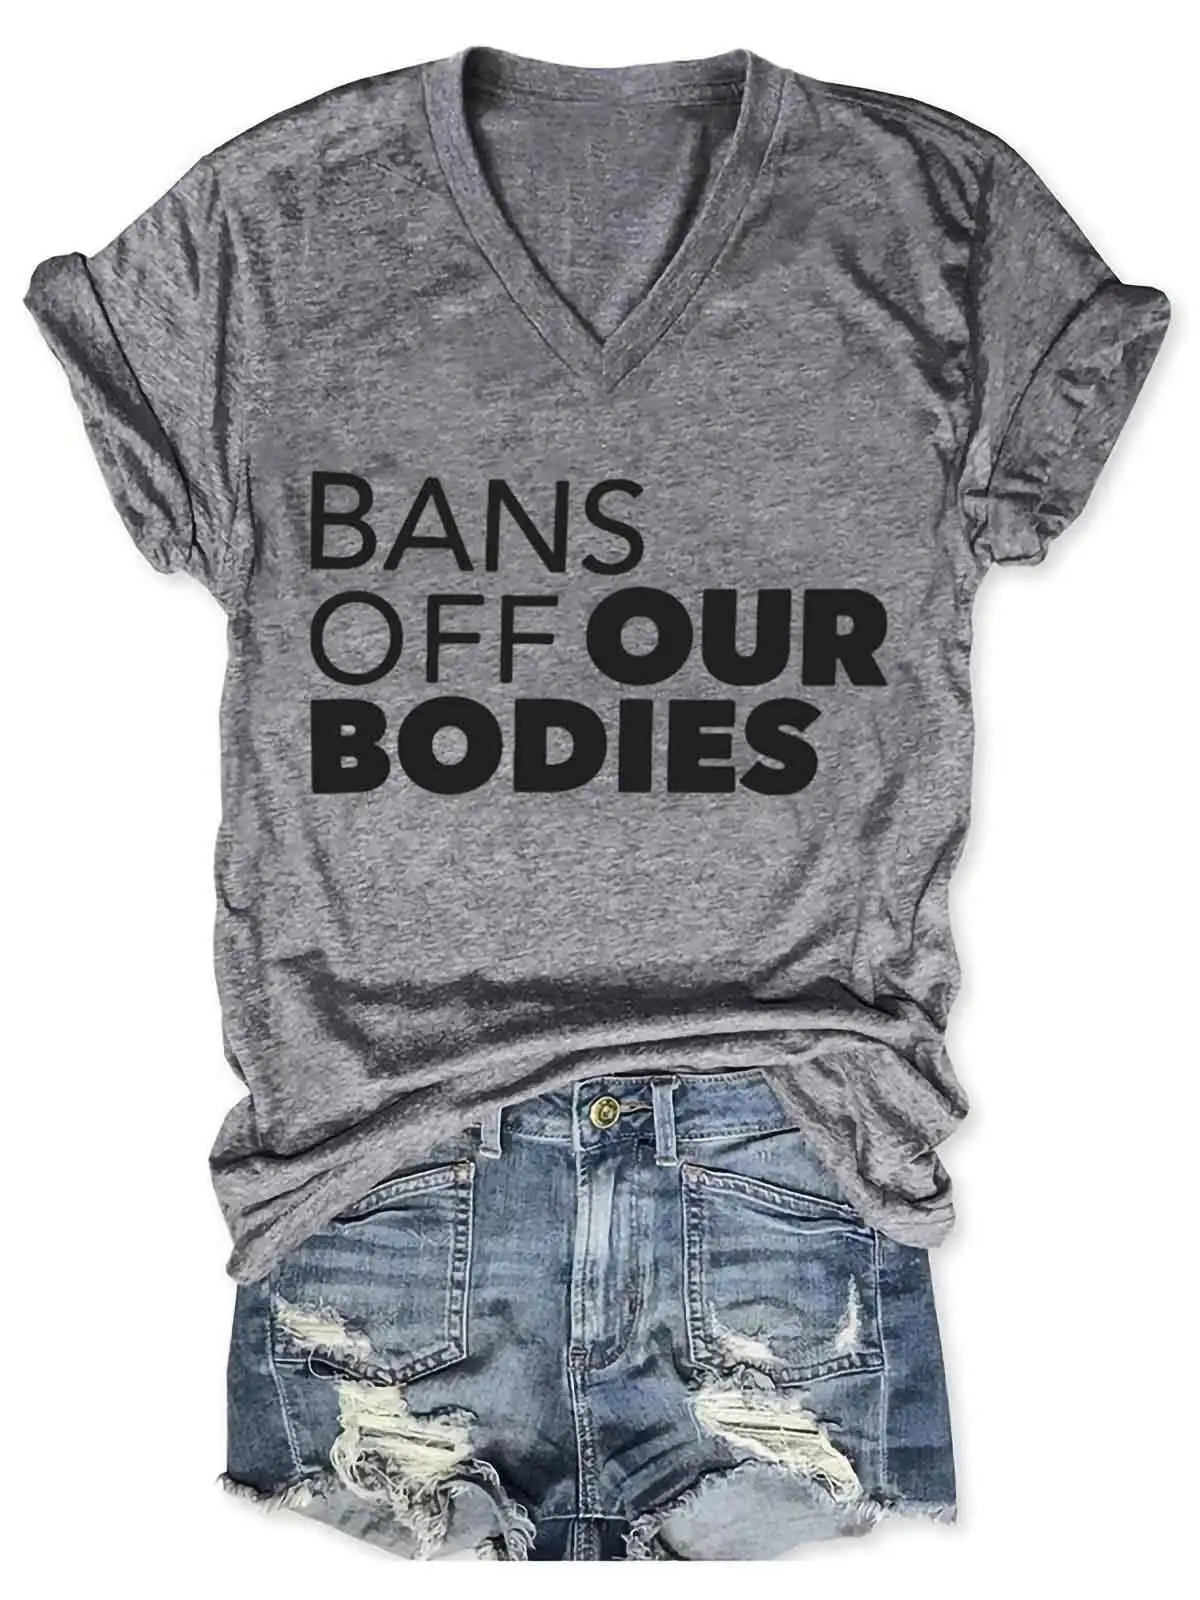 Lovessales Women's Bans Off Our Bodies Pro Life Pro Choice V-Neck 100% Cotton T-shirt